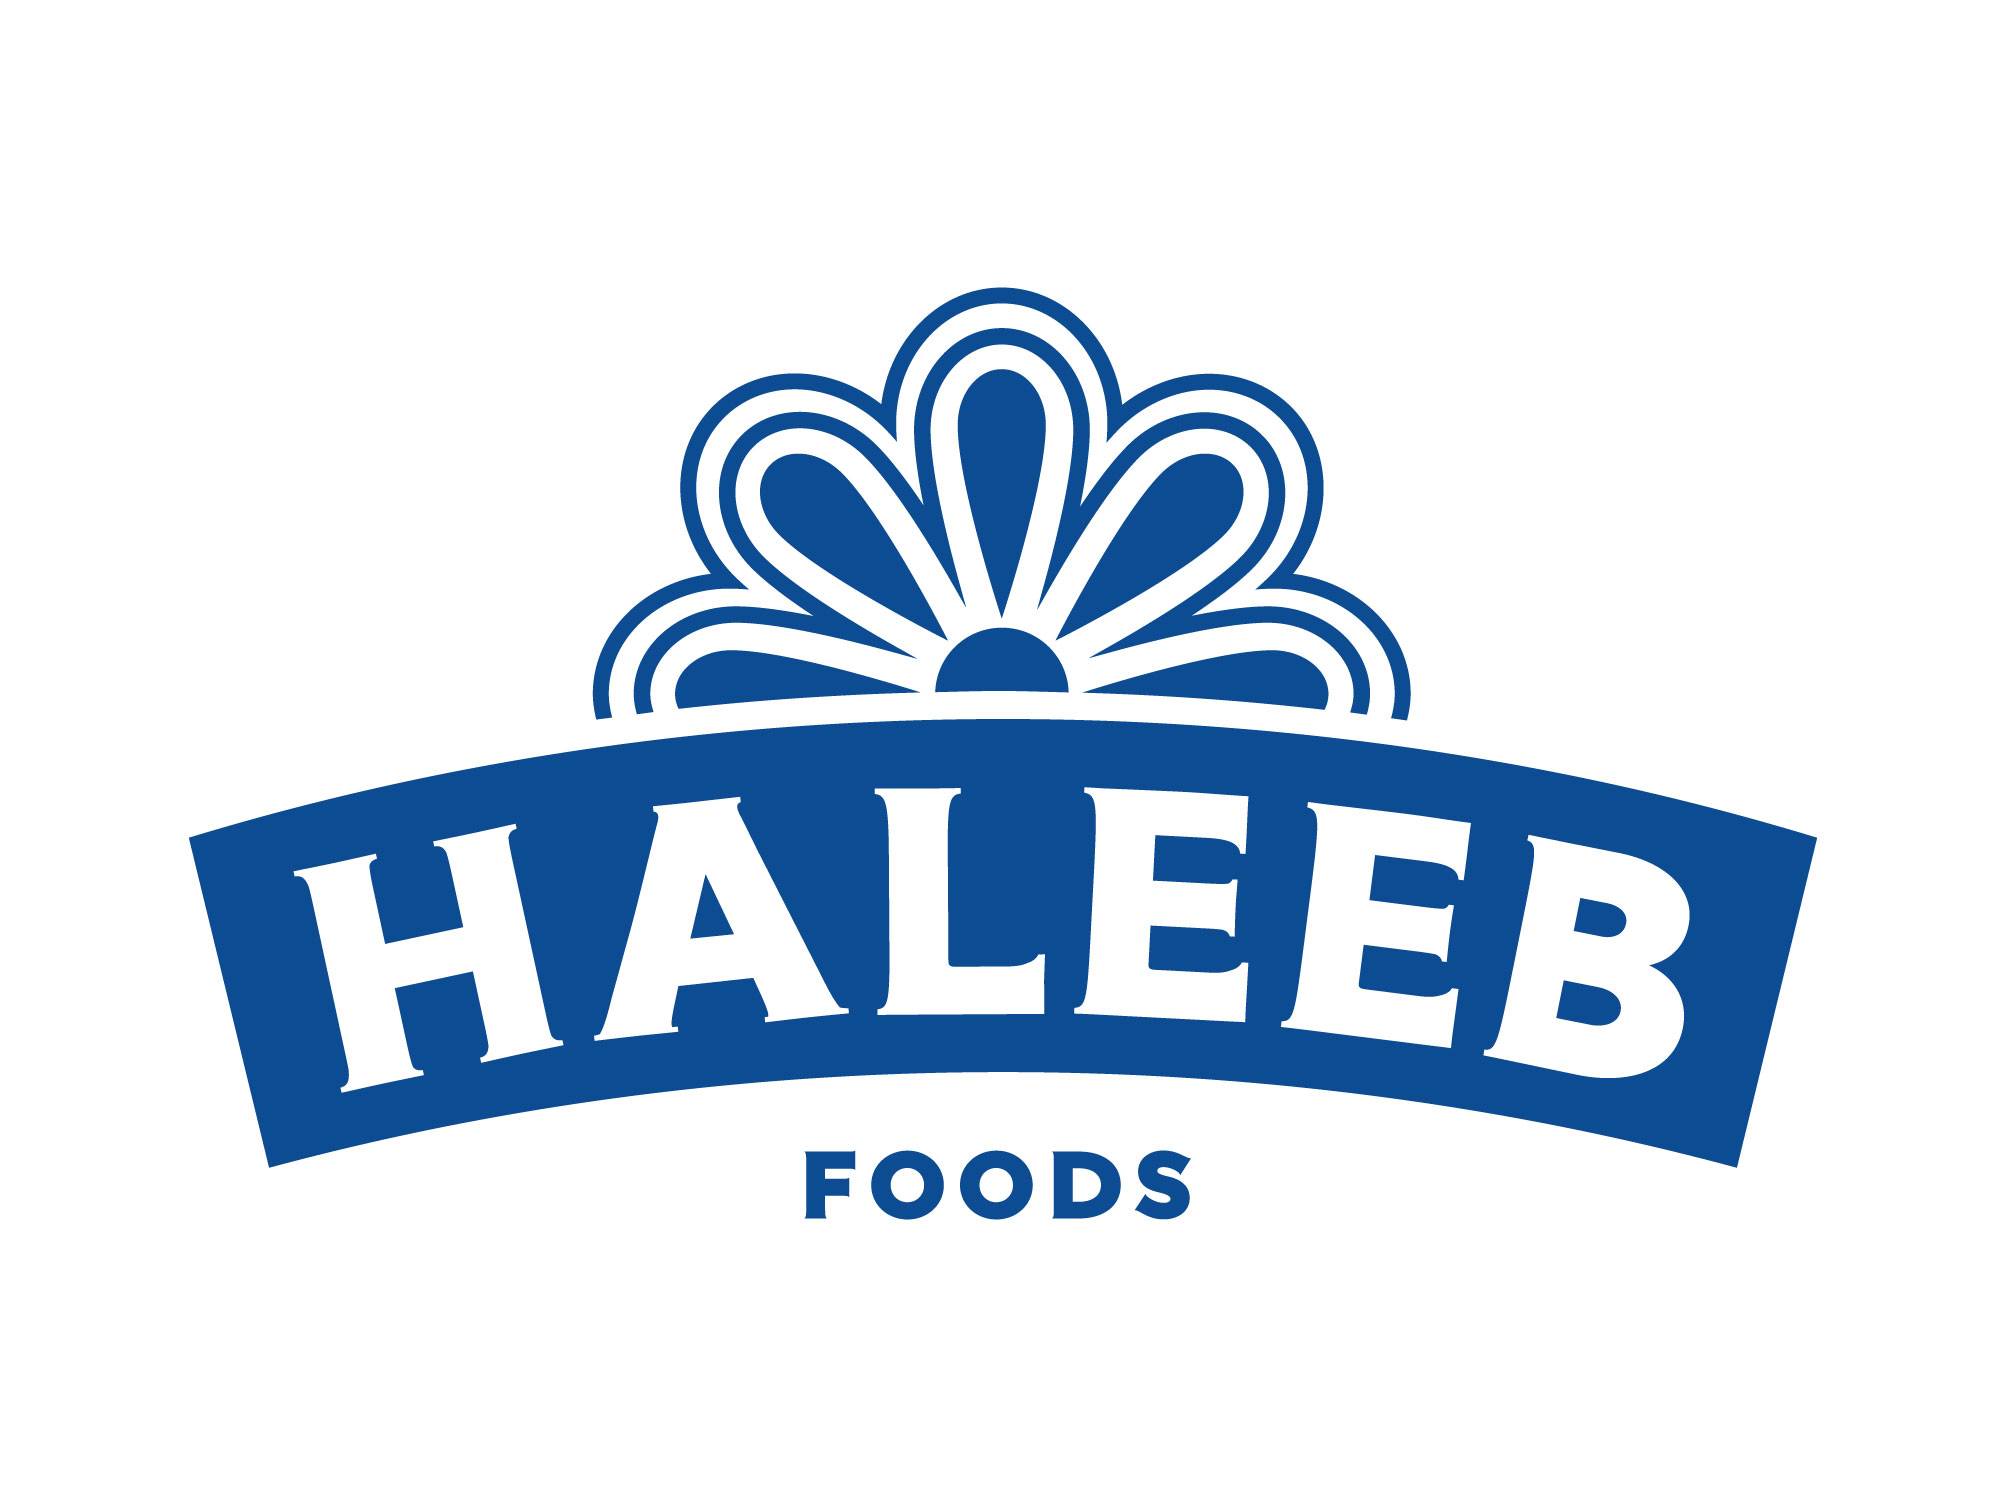 Haleeb Foods agreement with Matrix dairy farm